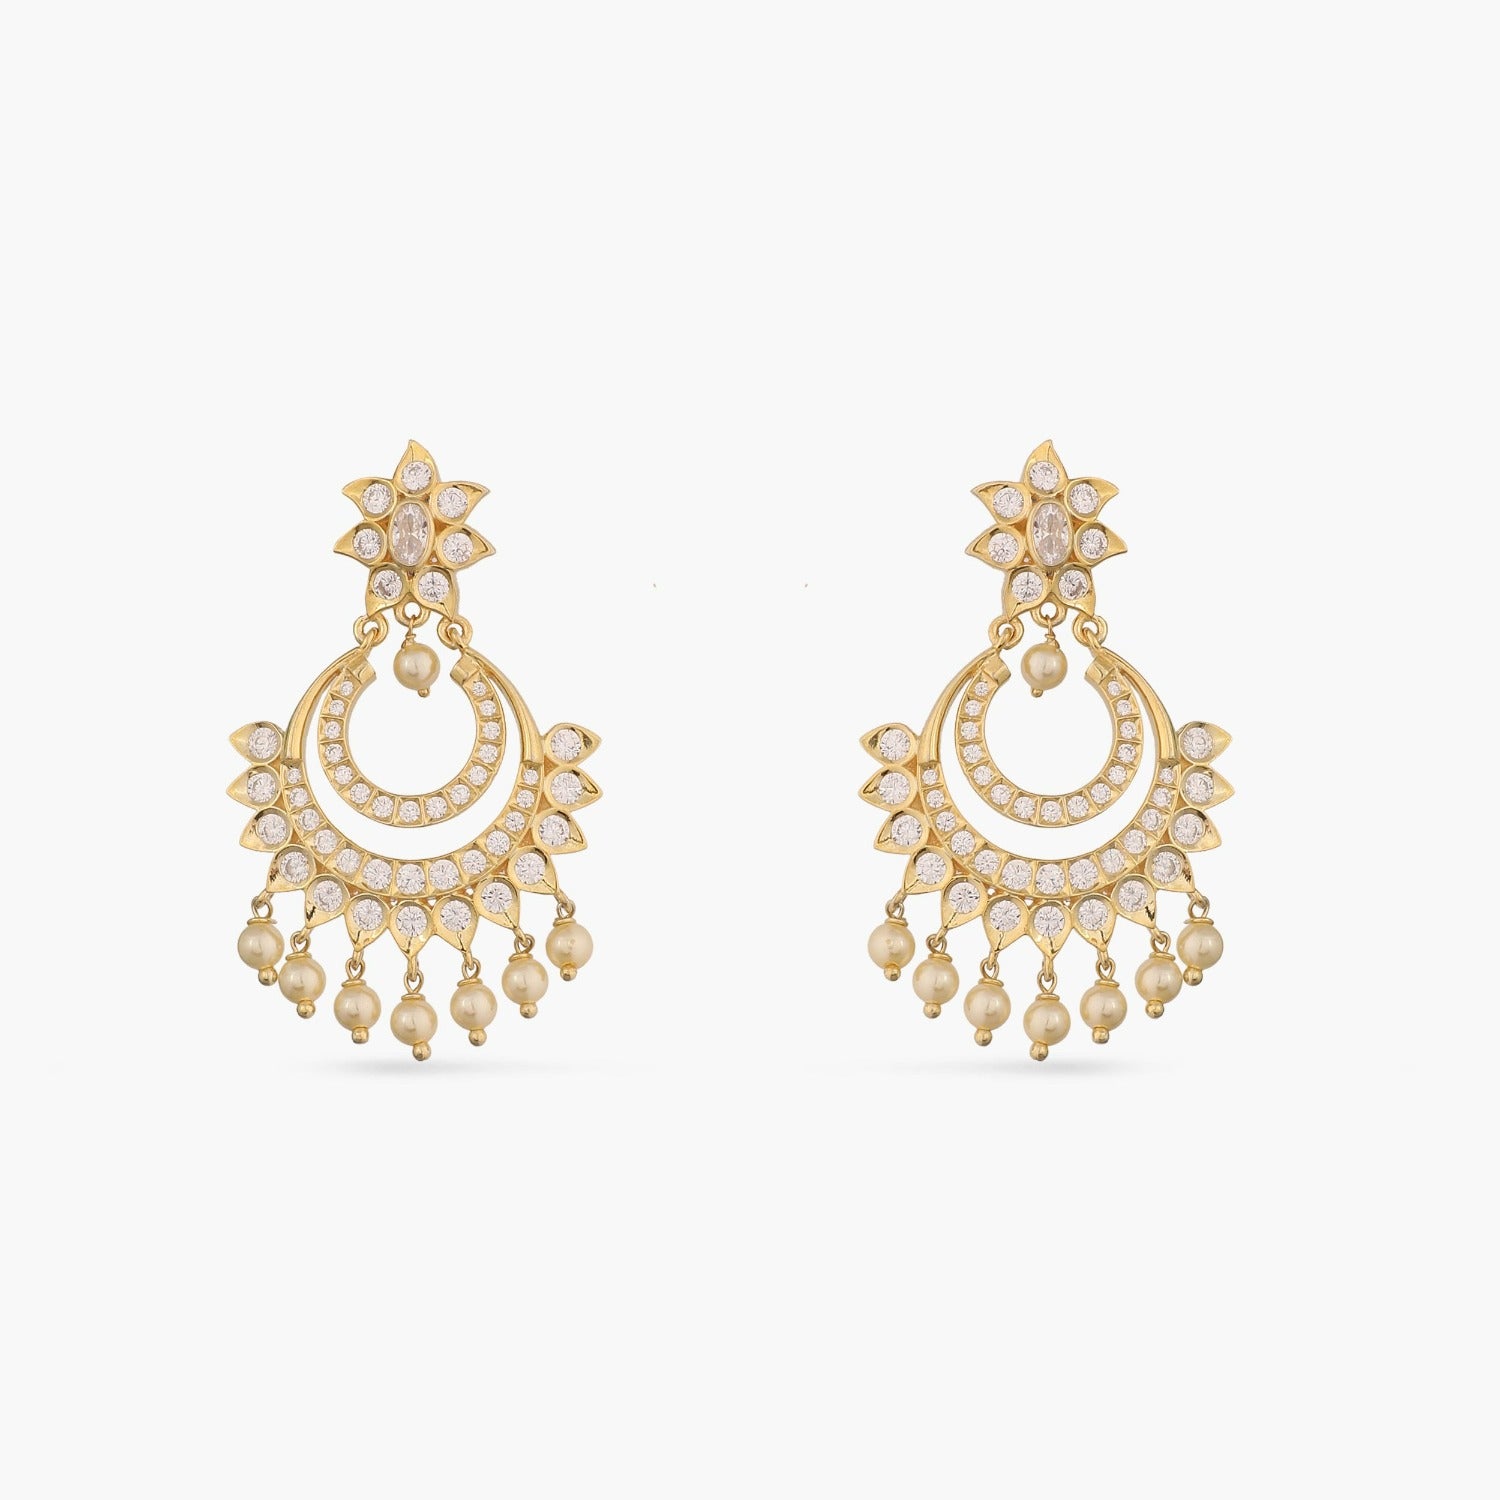 Buy Indian Kundan Wedding Jewellery at Best Prices - KARMAPLACE.COM